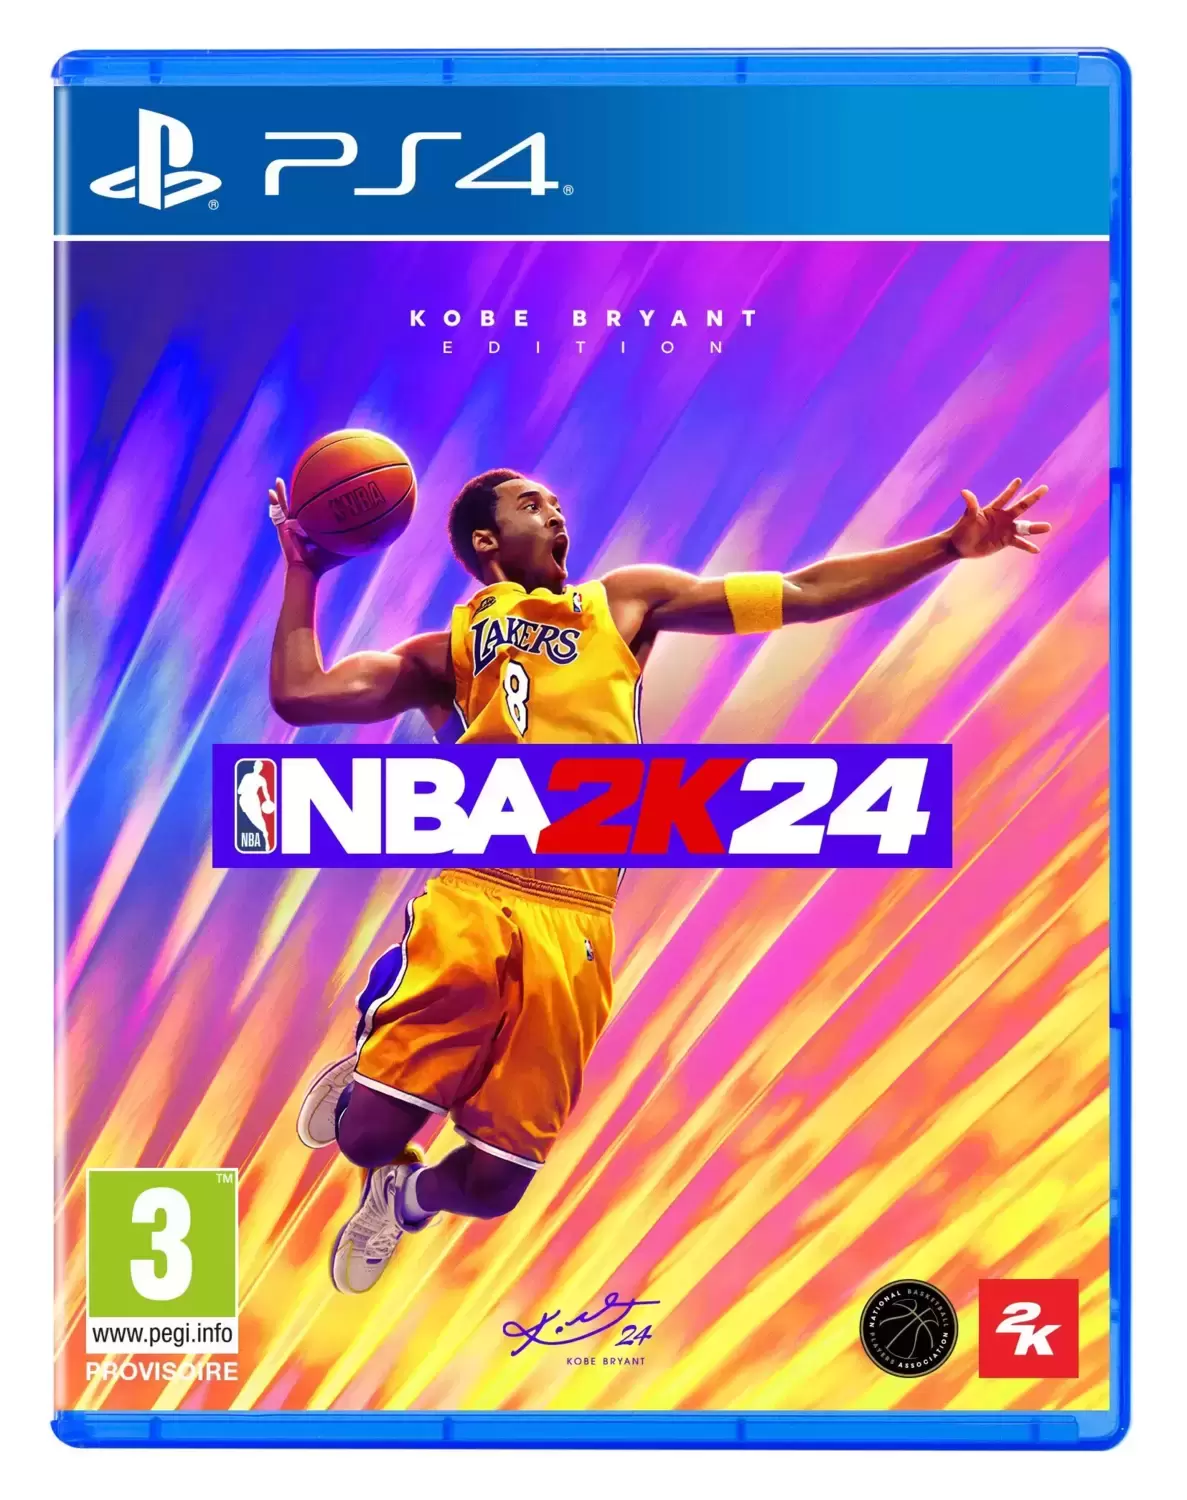 PS4 Games - NBA 2K24 - Kobe Bryant Edition